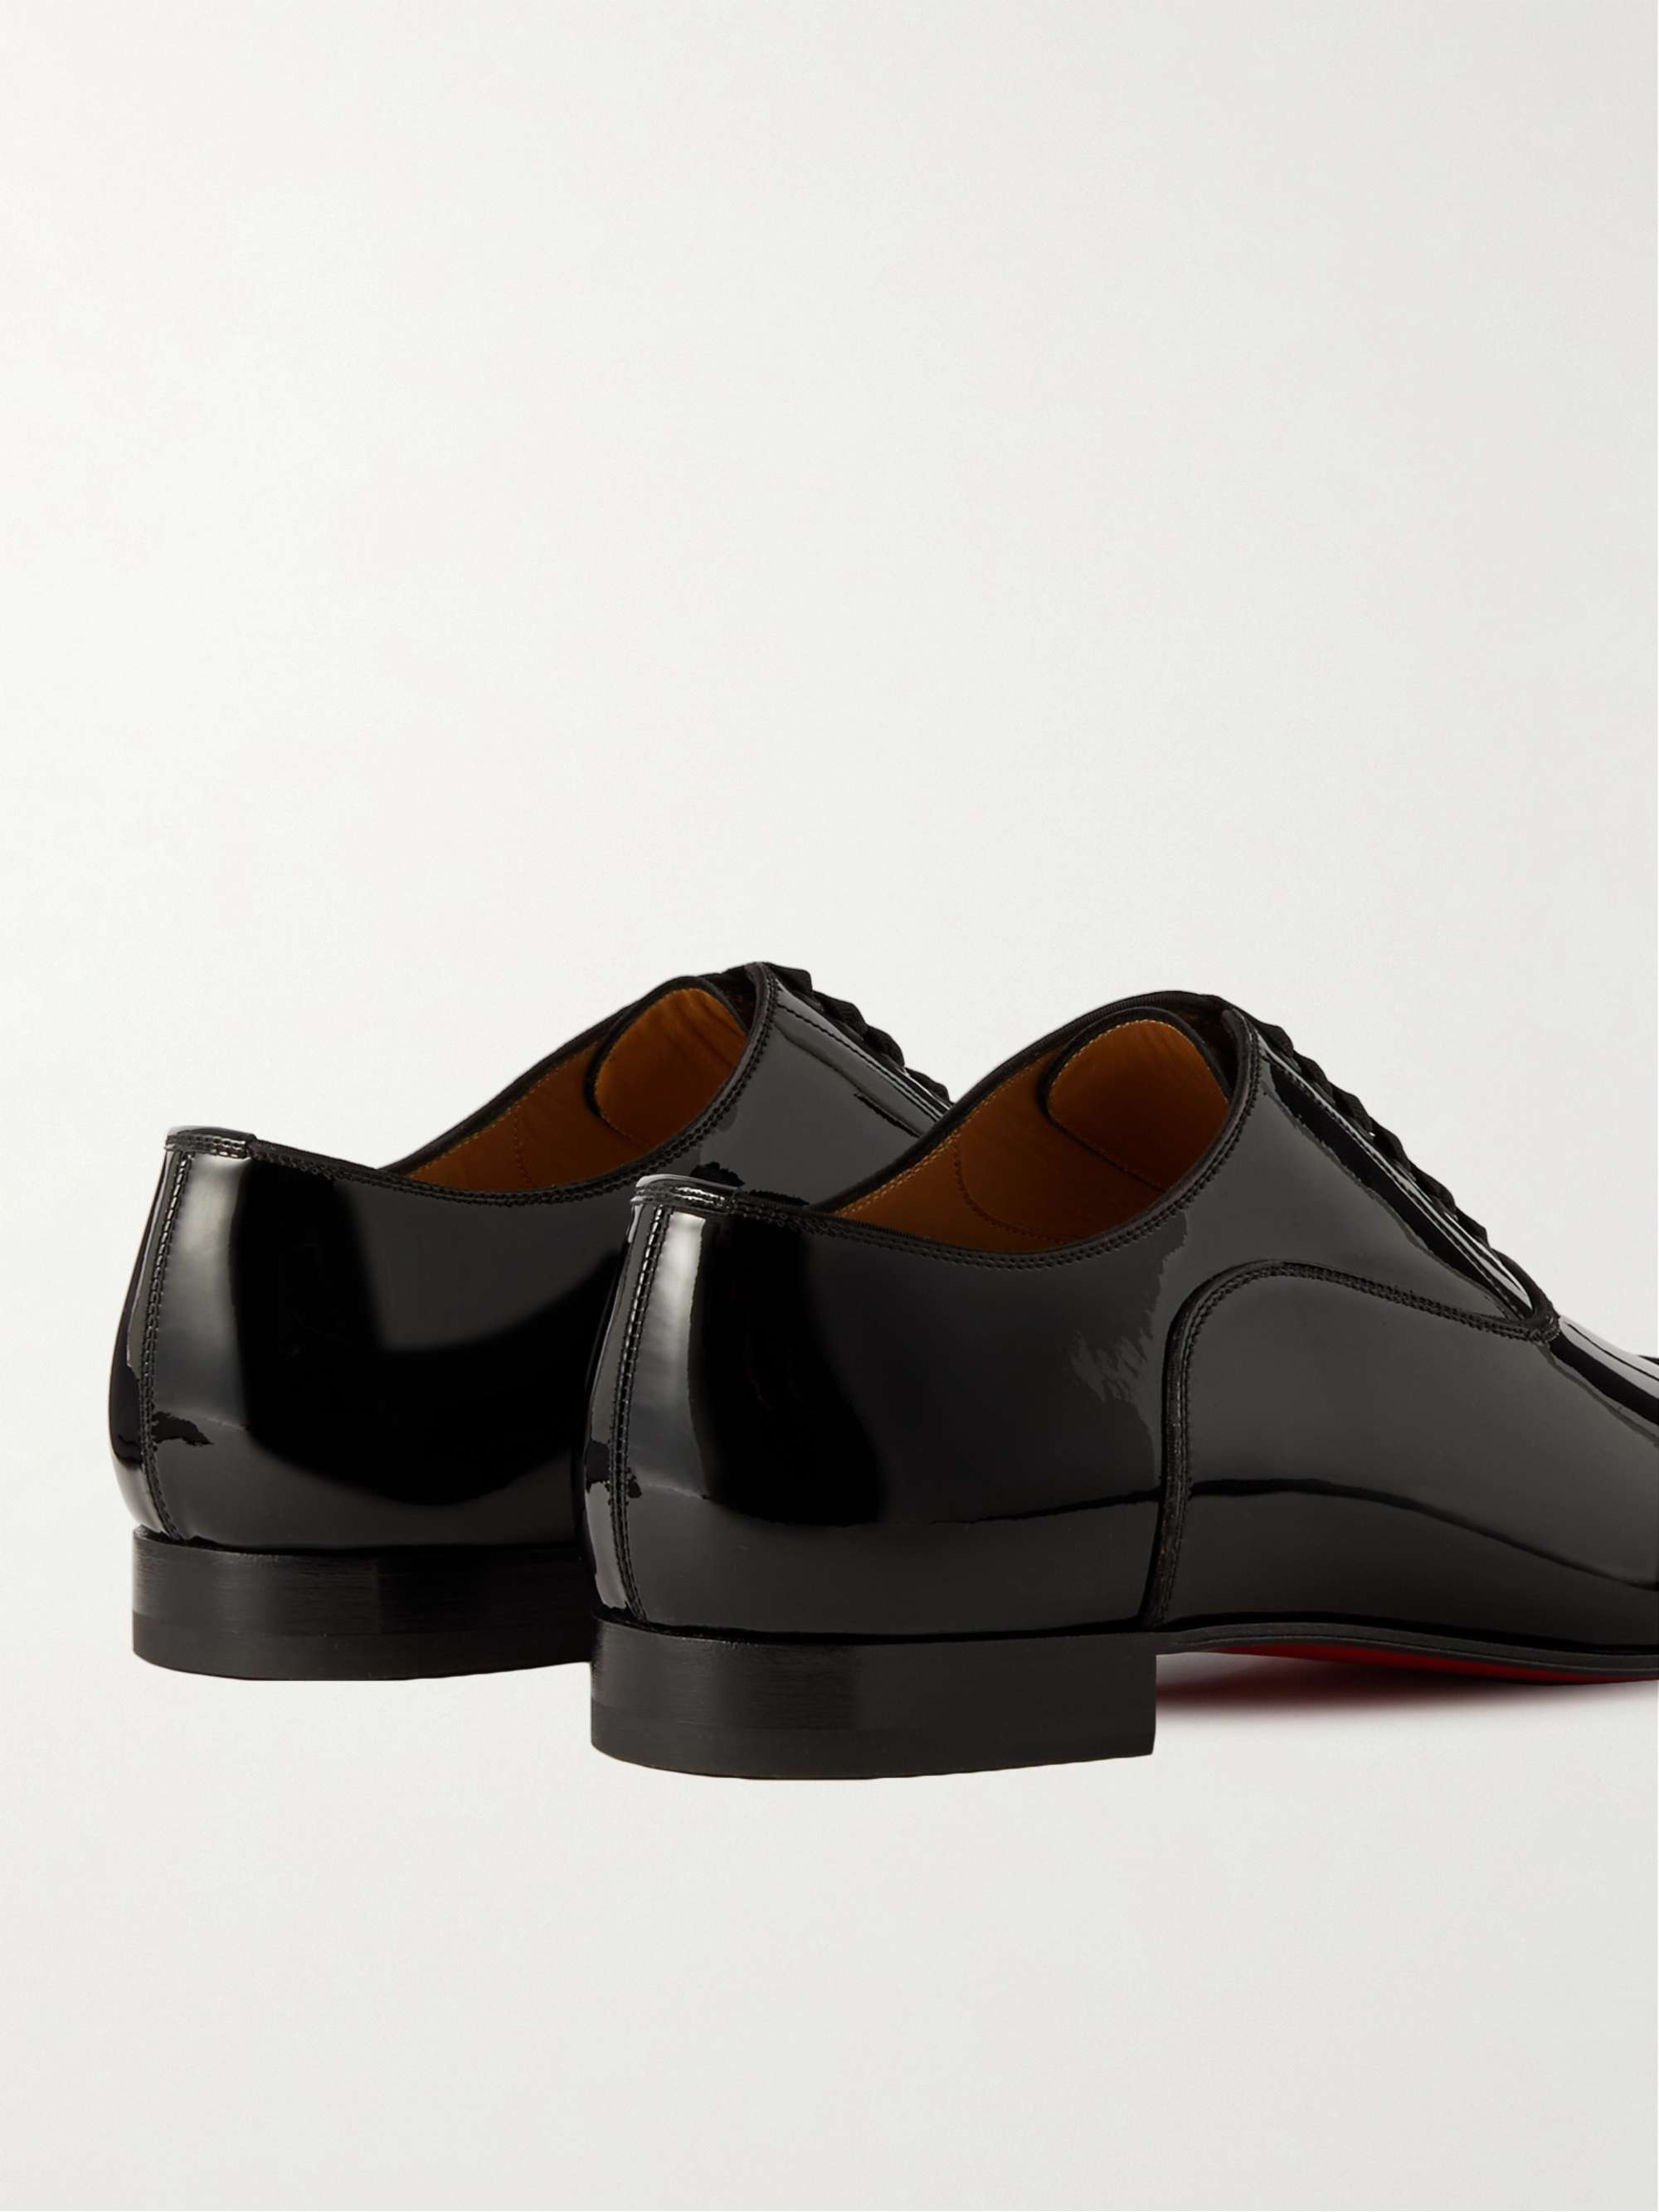 CHRISTIAN LOUBOUTIN Greggo Patent-Leather Oxford Shoes